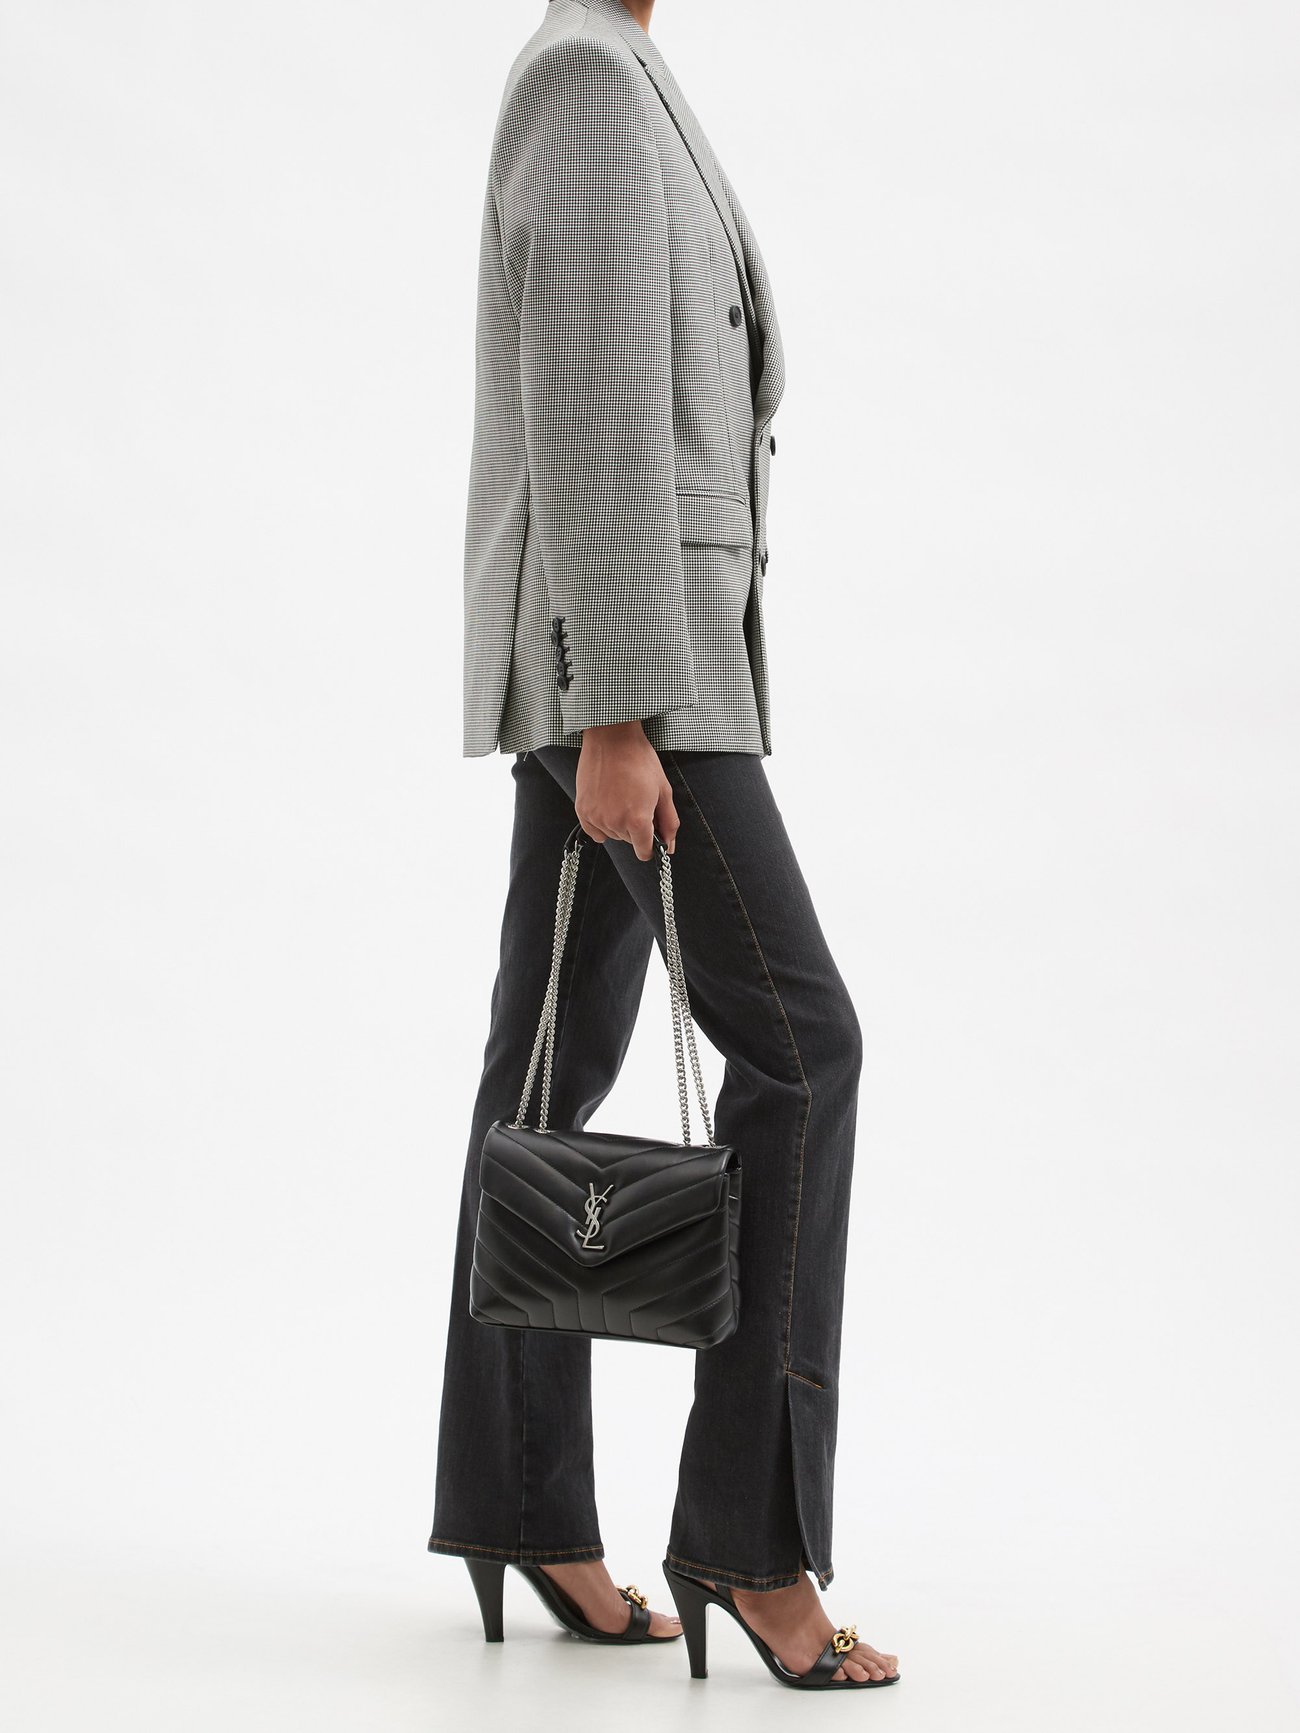 SAINT LAURENT - Loulou Small Quilted Leather Shoulder Bag - Black